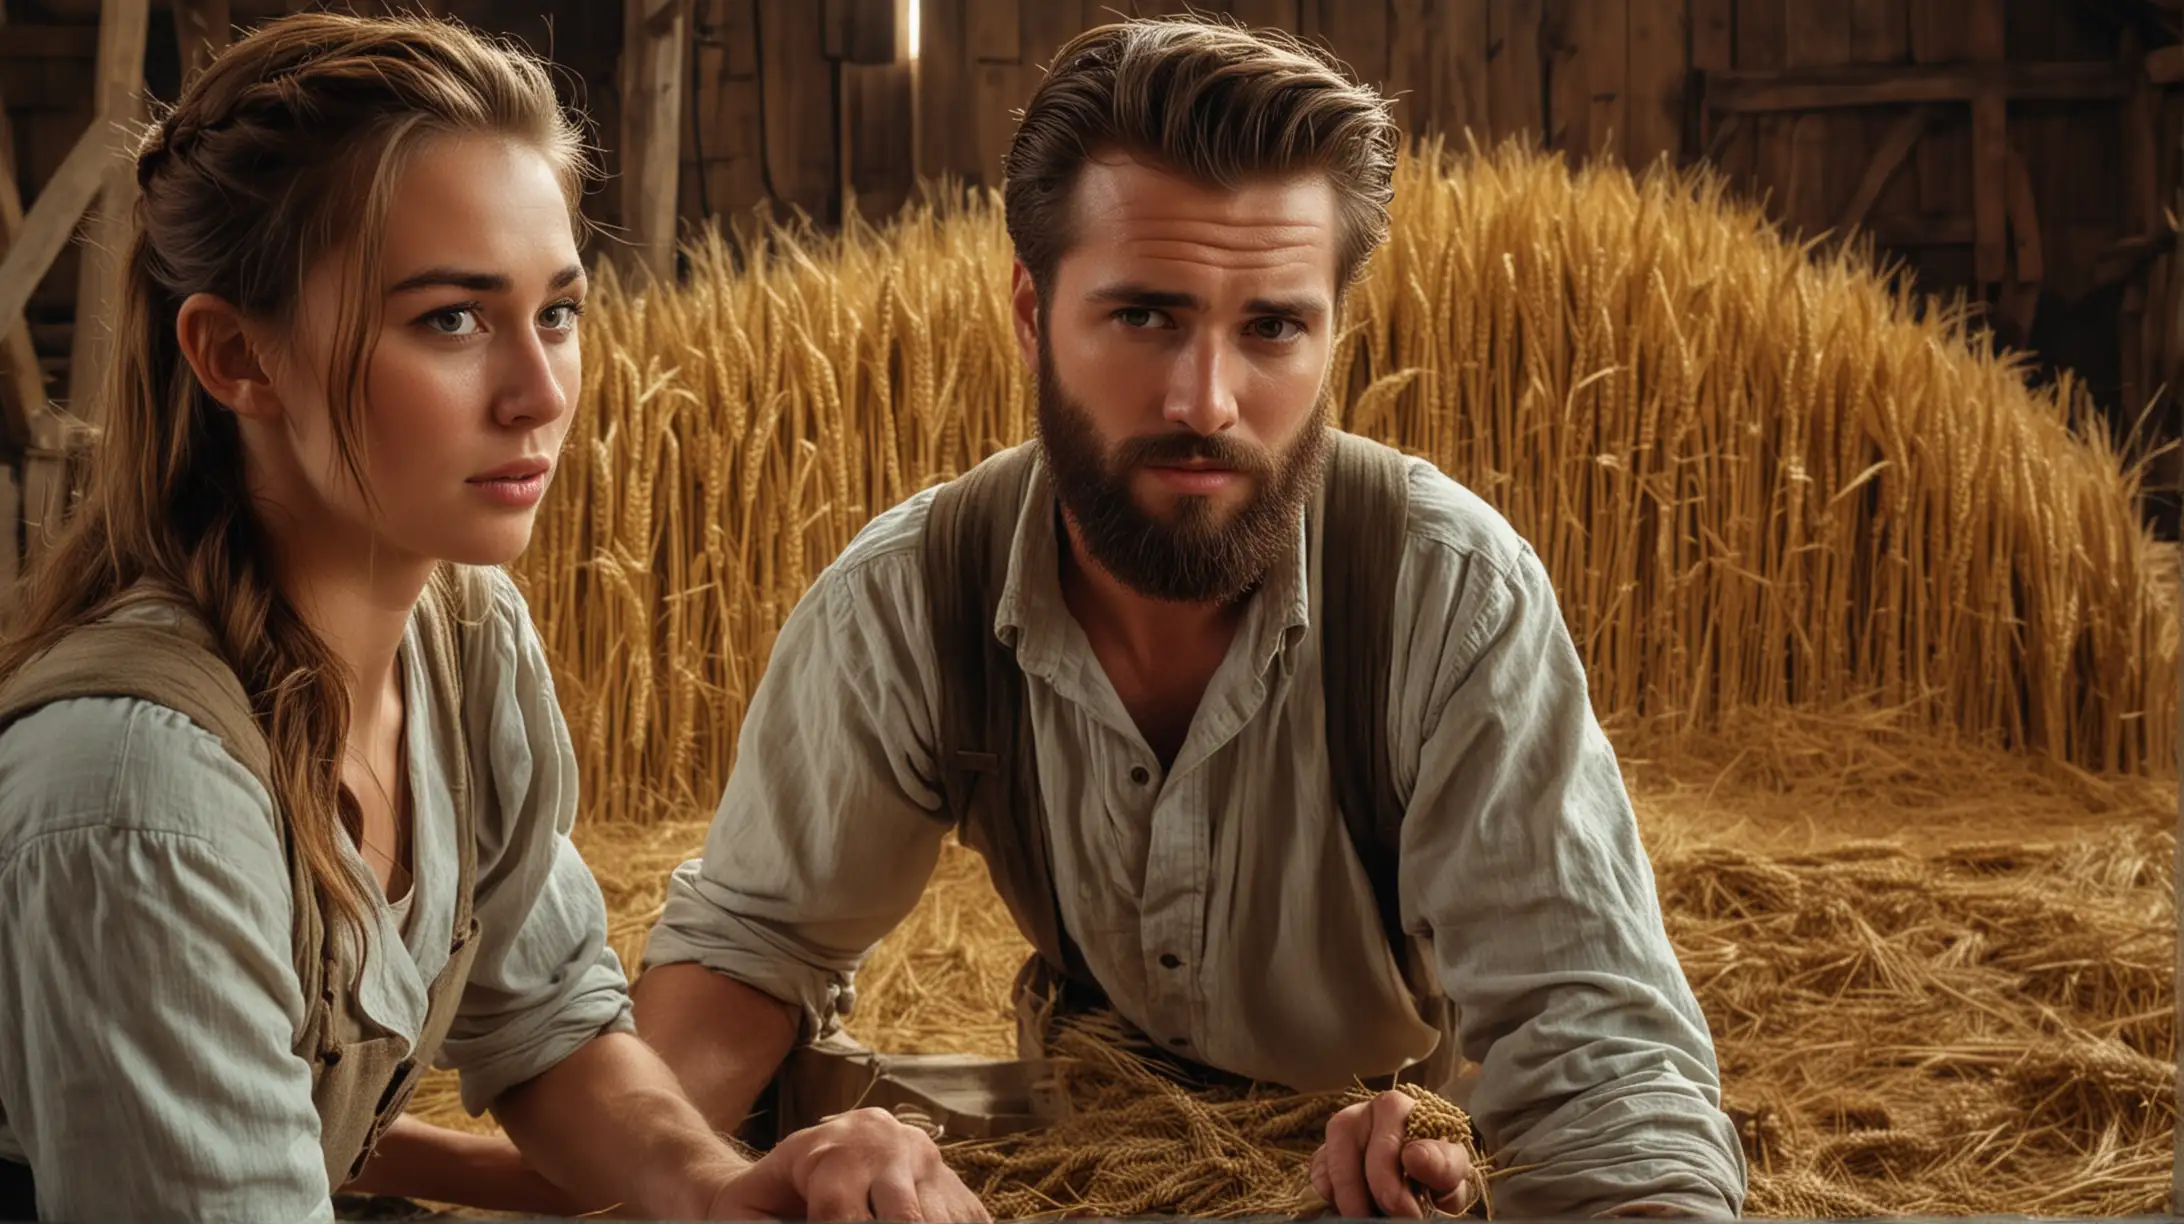 Biblical Era Harvest Handsome Man Threshing Wheat with Attractive Woman Watching